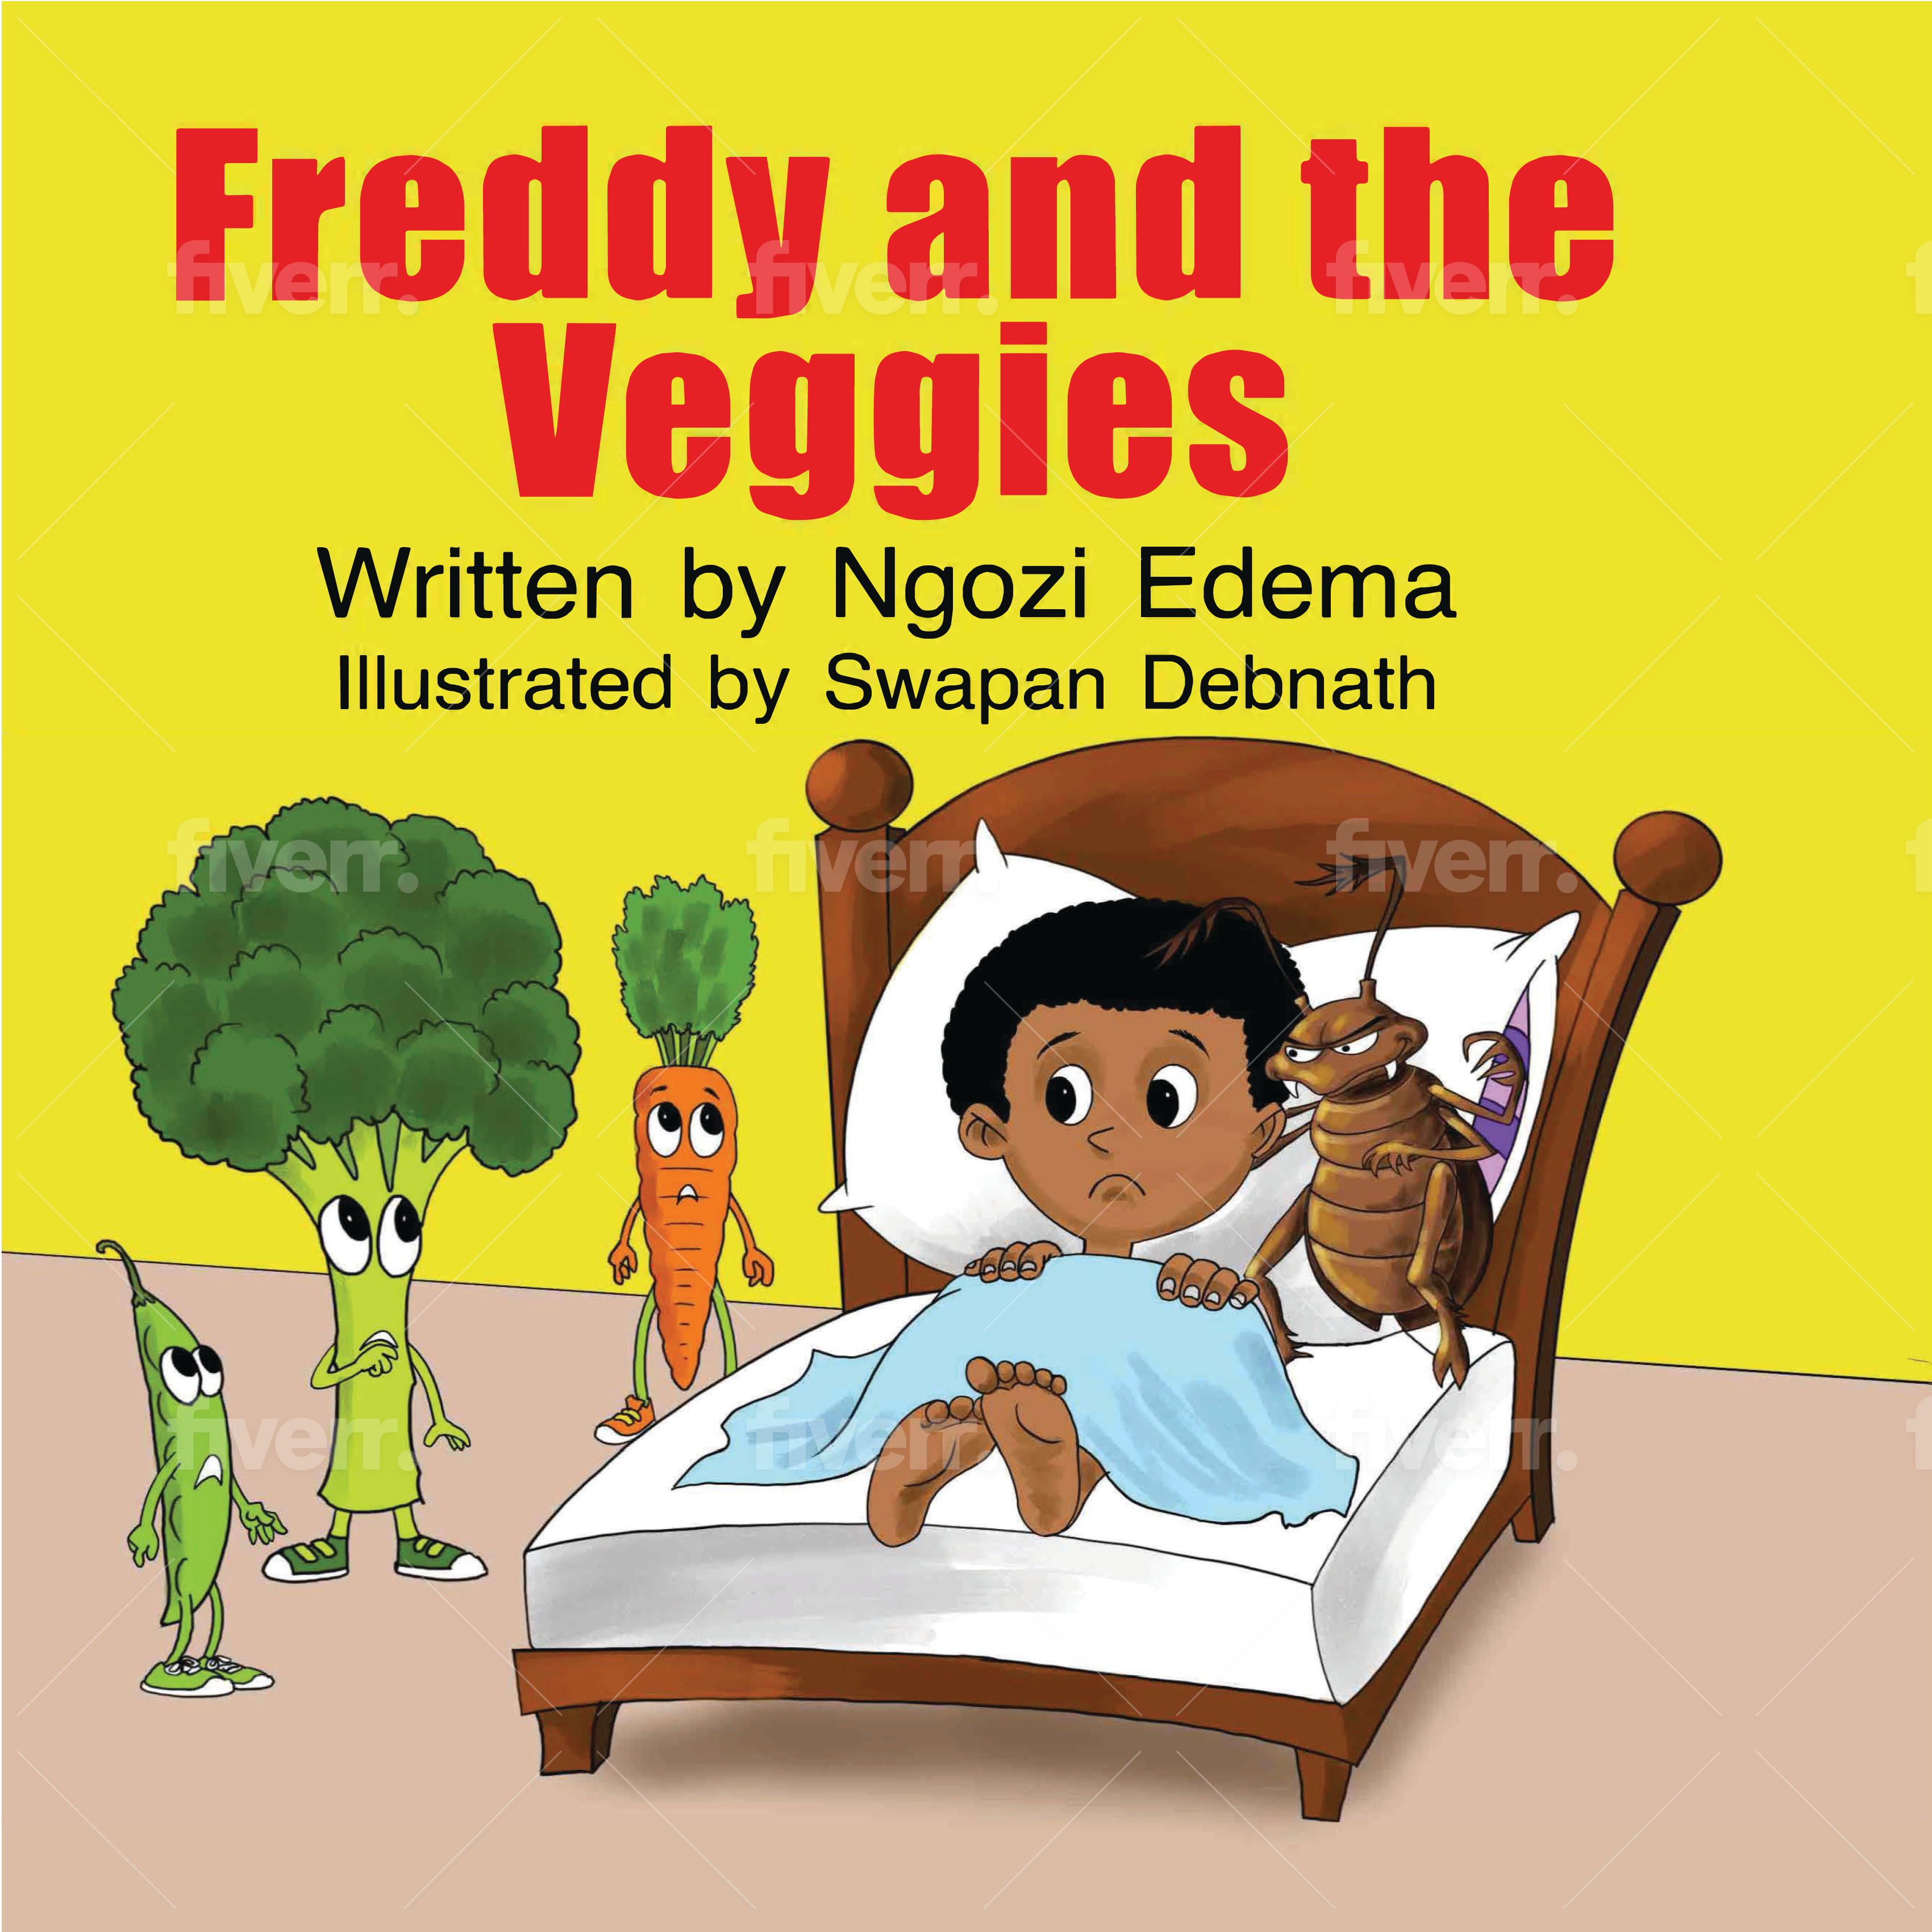 Freddy and Veggies